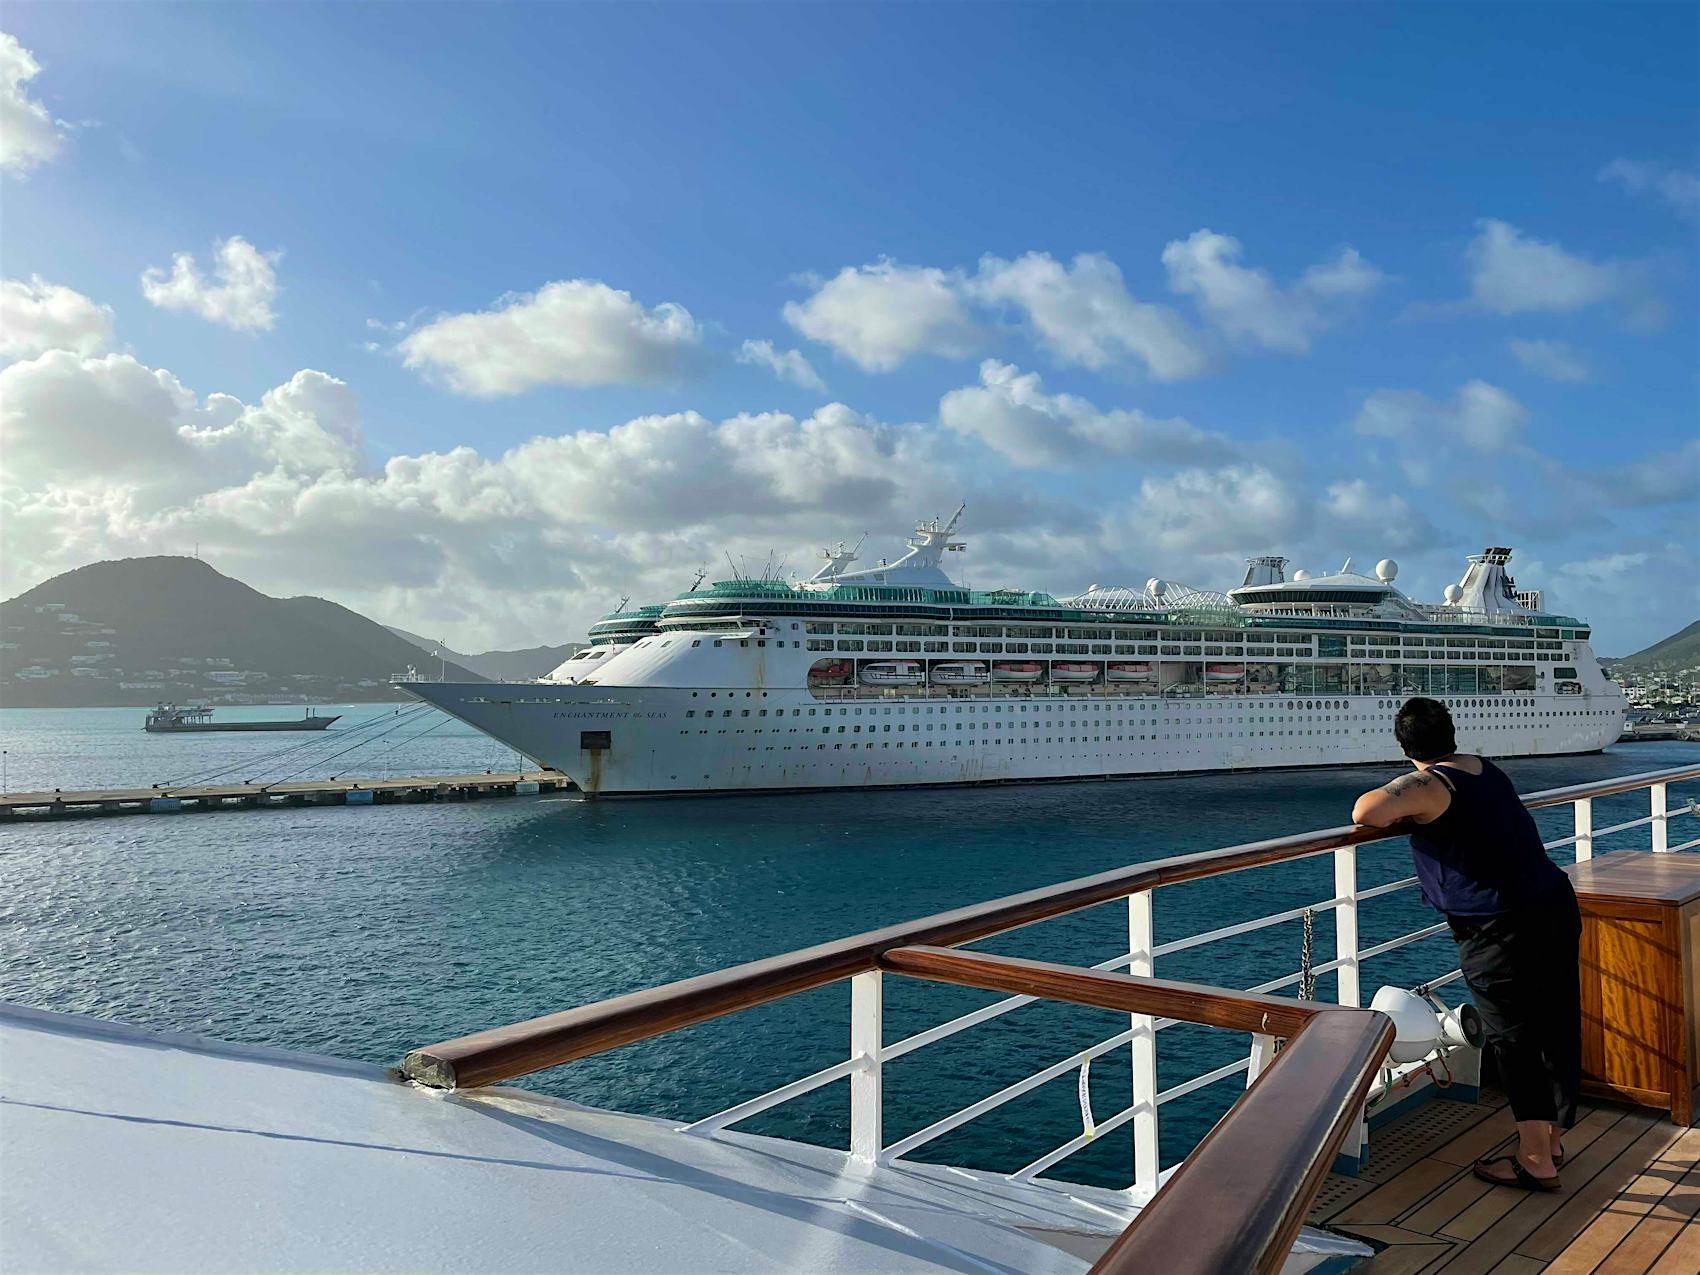 Windstar's Star Breeze is cruising through the Caribbean